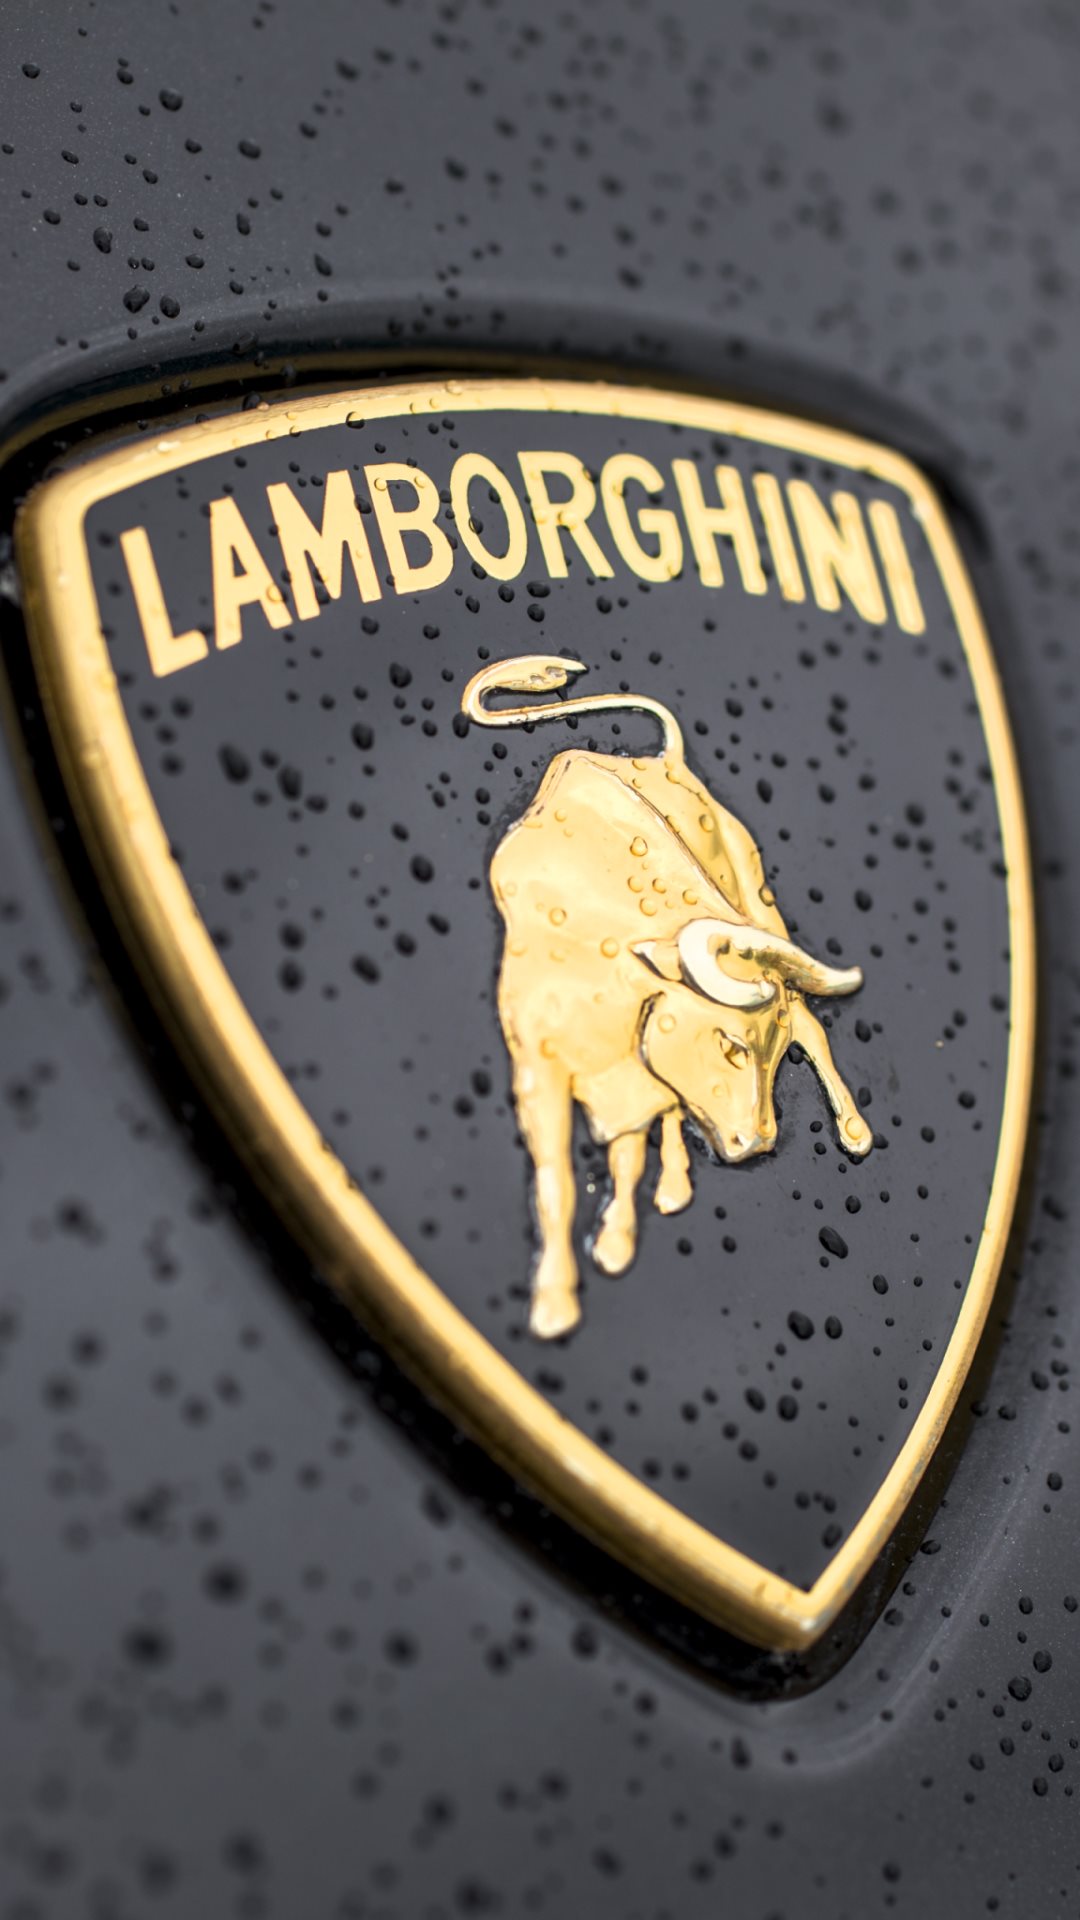 Lamborghini Logo Close-up Android Wallpaper.jpg